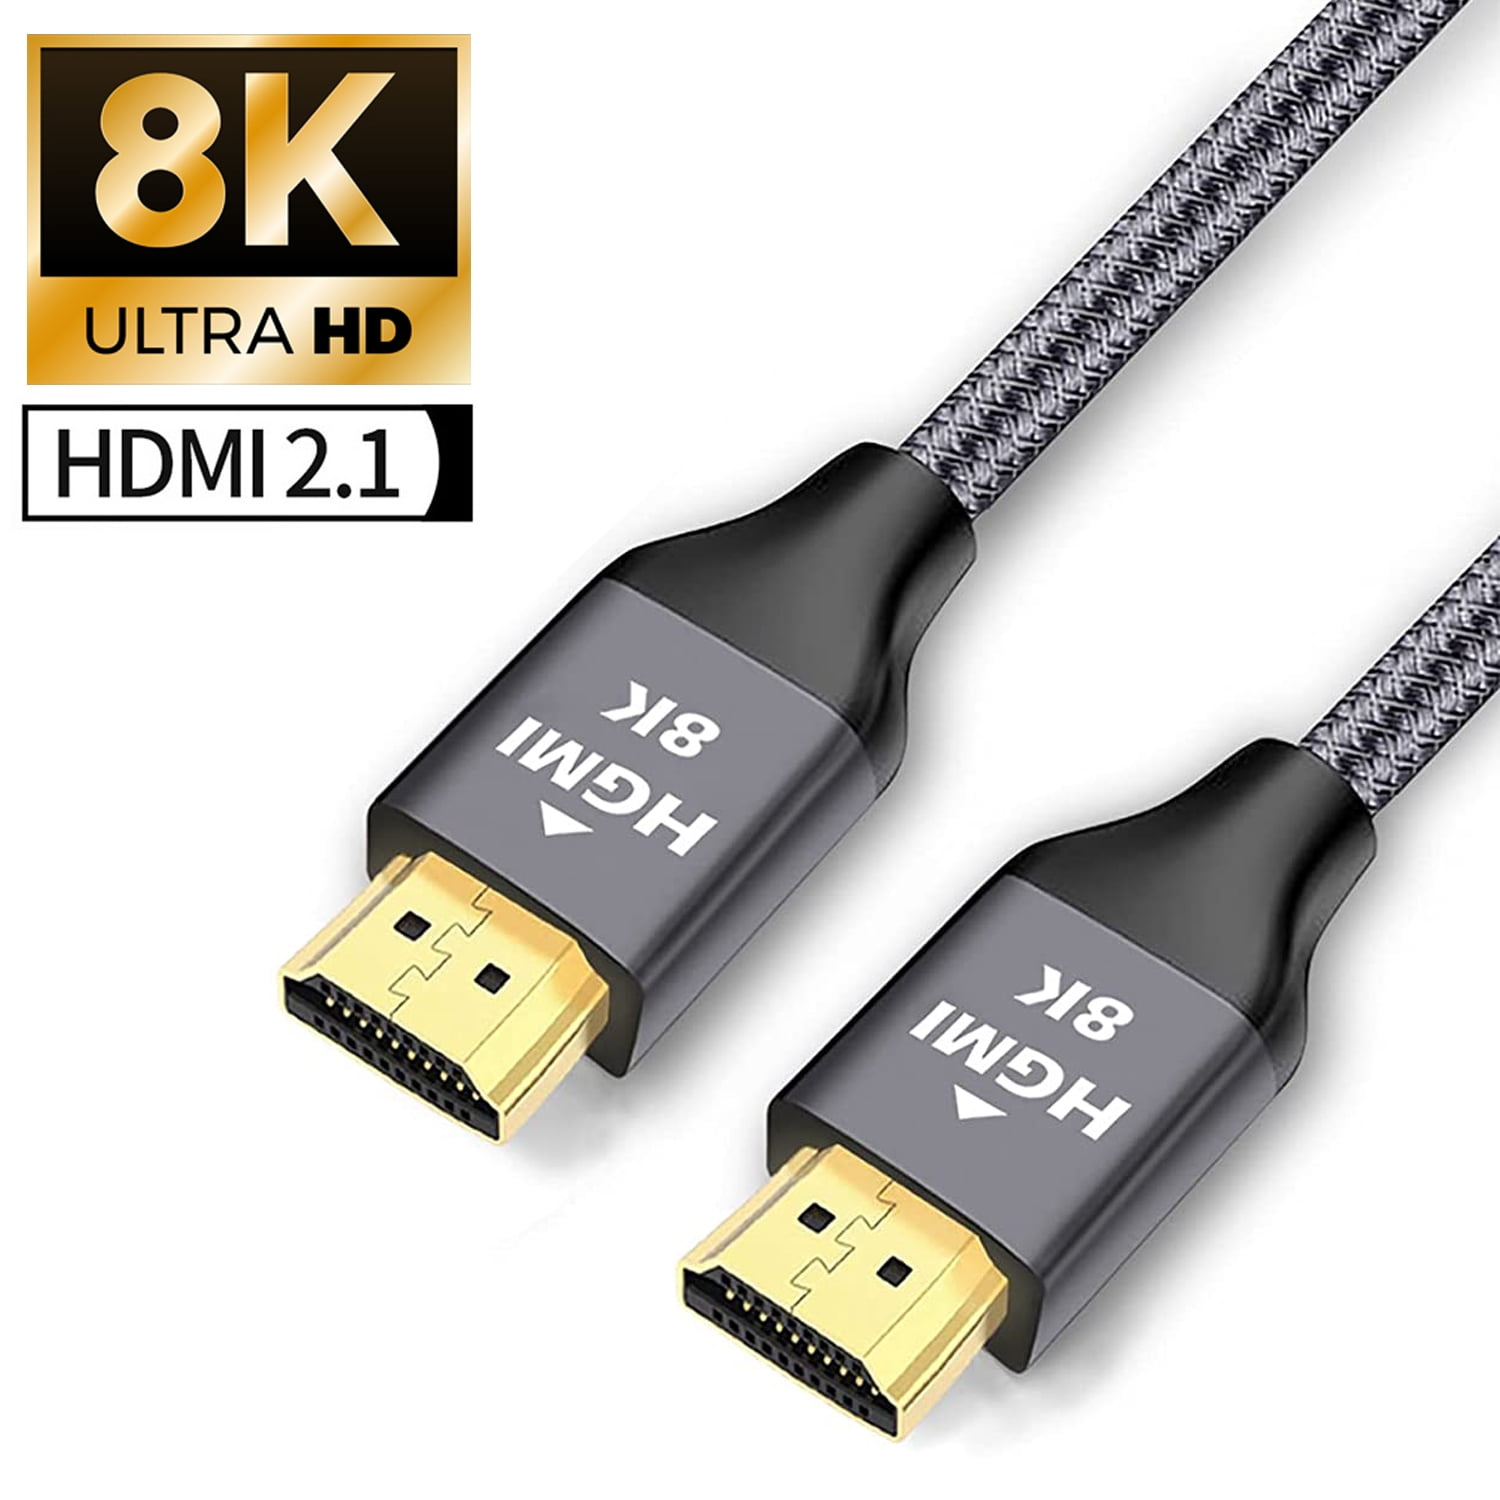 1,5M/5ft LED HDMI Cable, Premium quality, 8K/60Hz